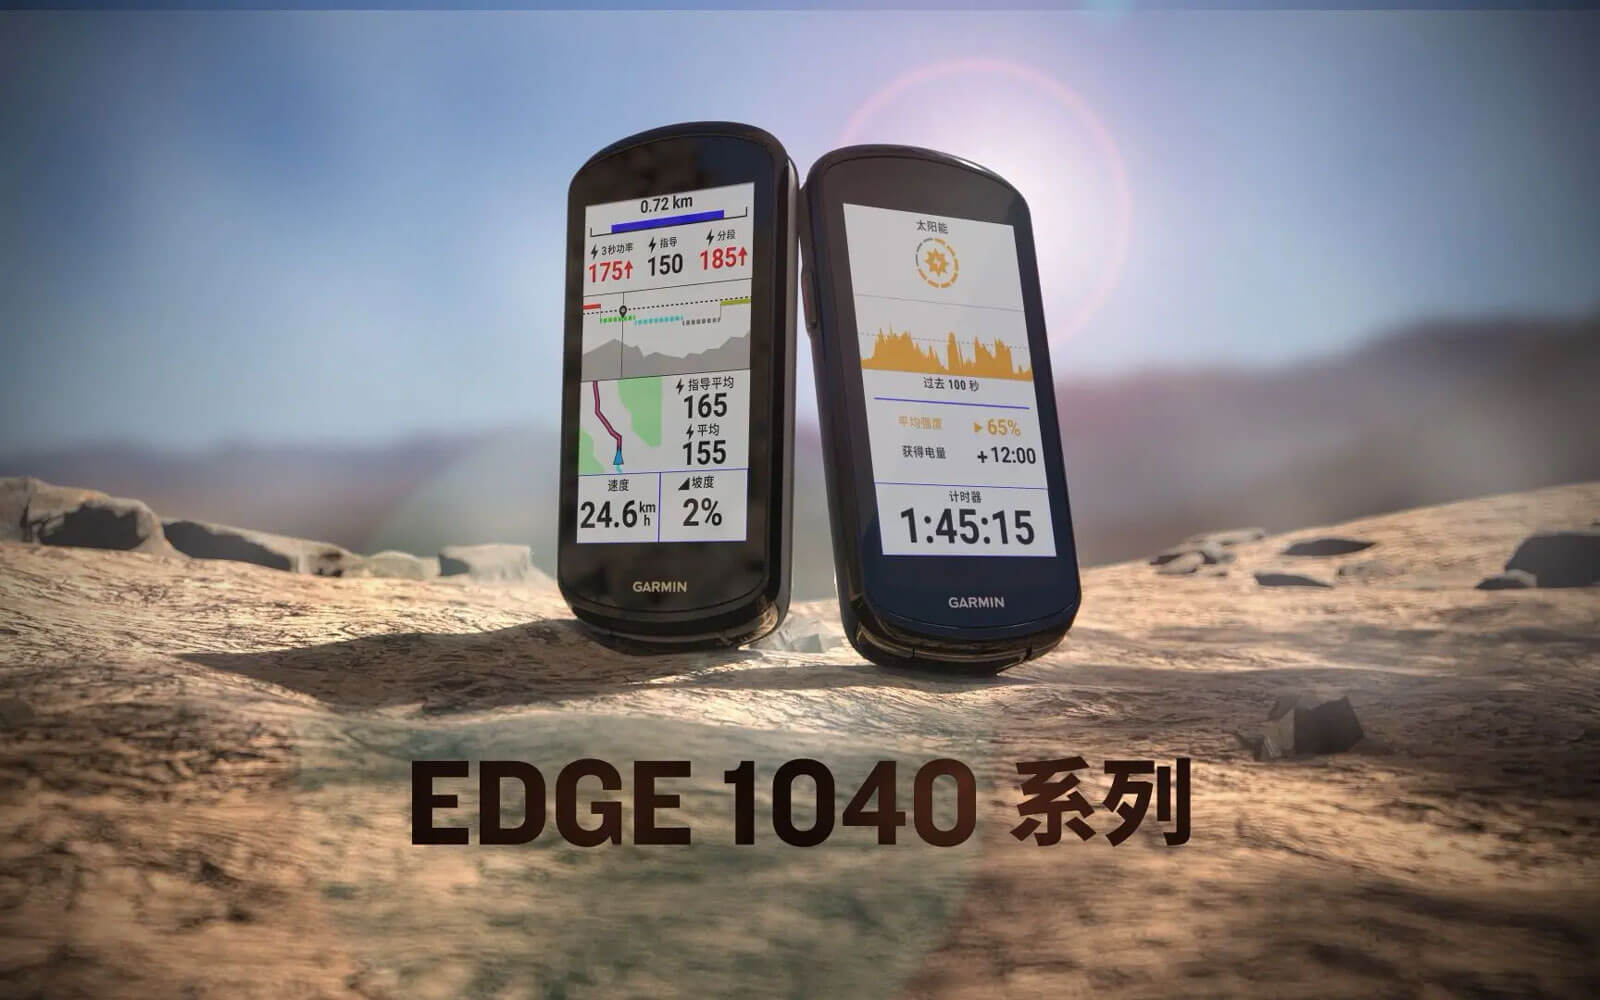 Edge 1040 - 太阳能GPS专业自行车码表